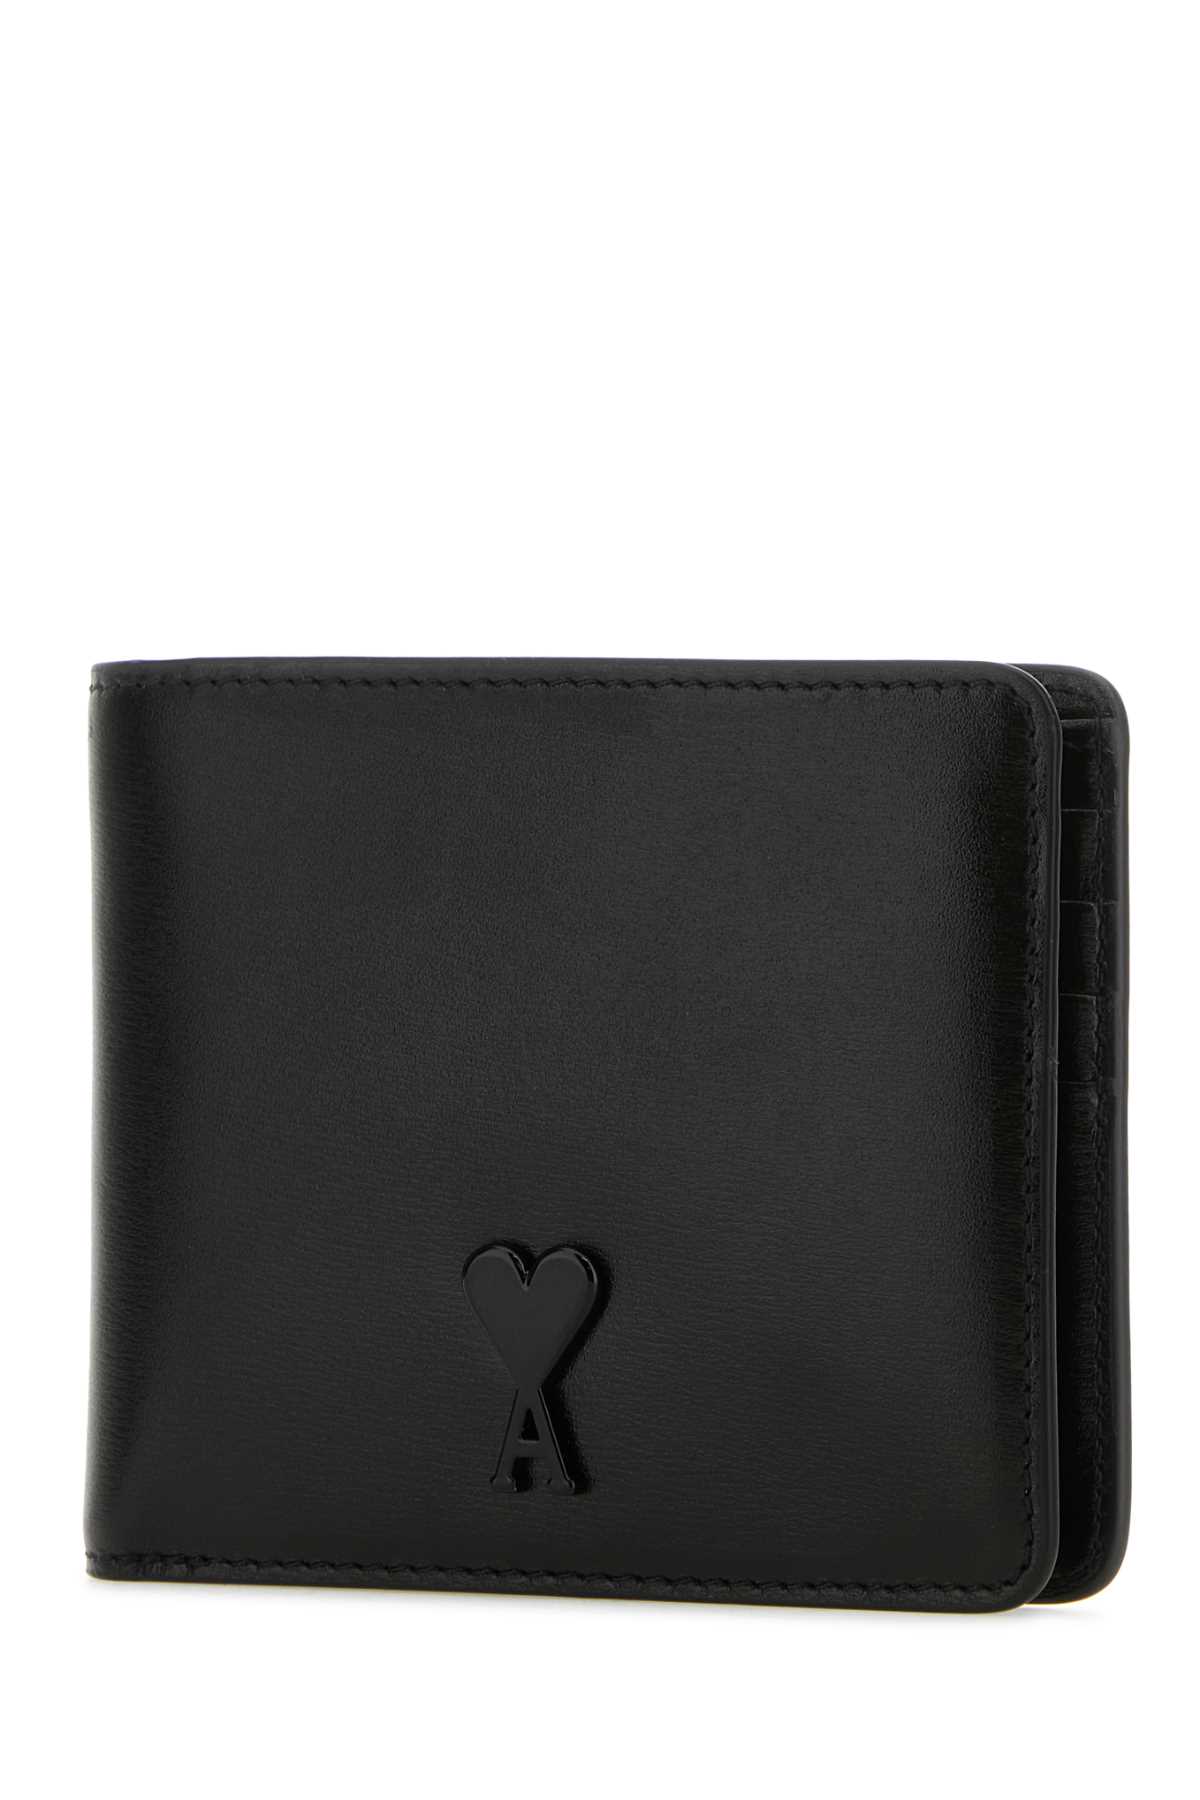 Ami Alexandre Mattiussi Black Leather Wallet